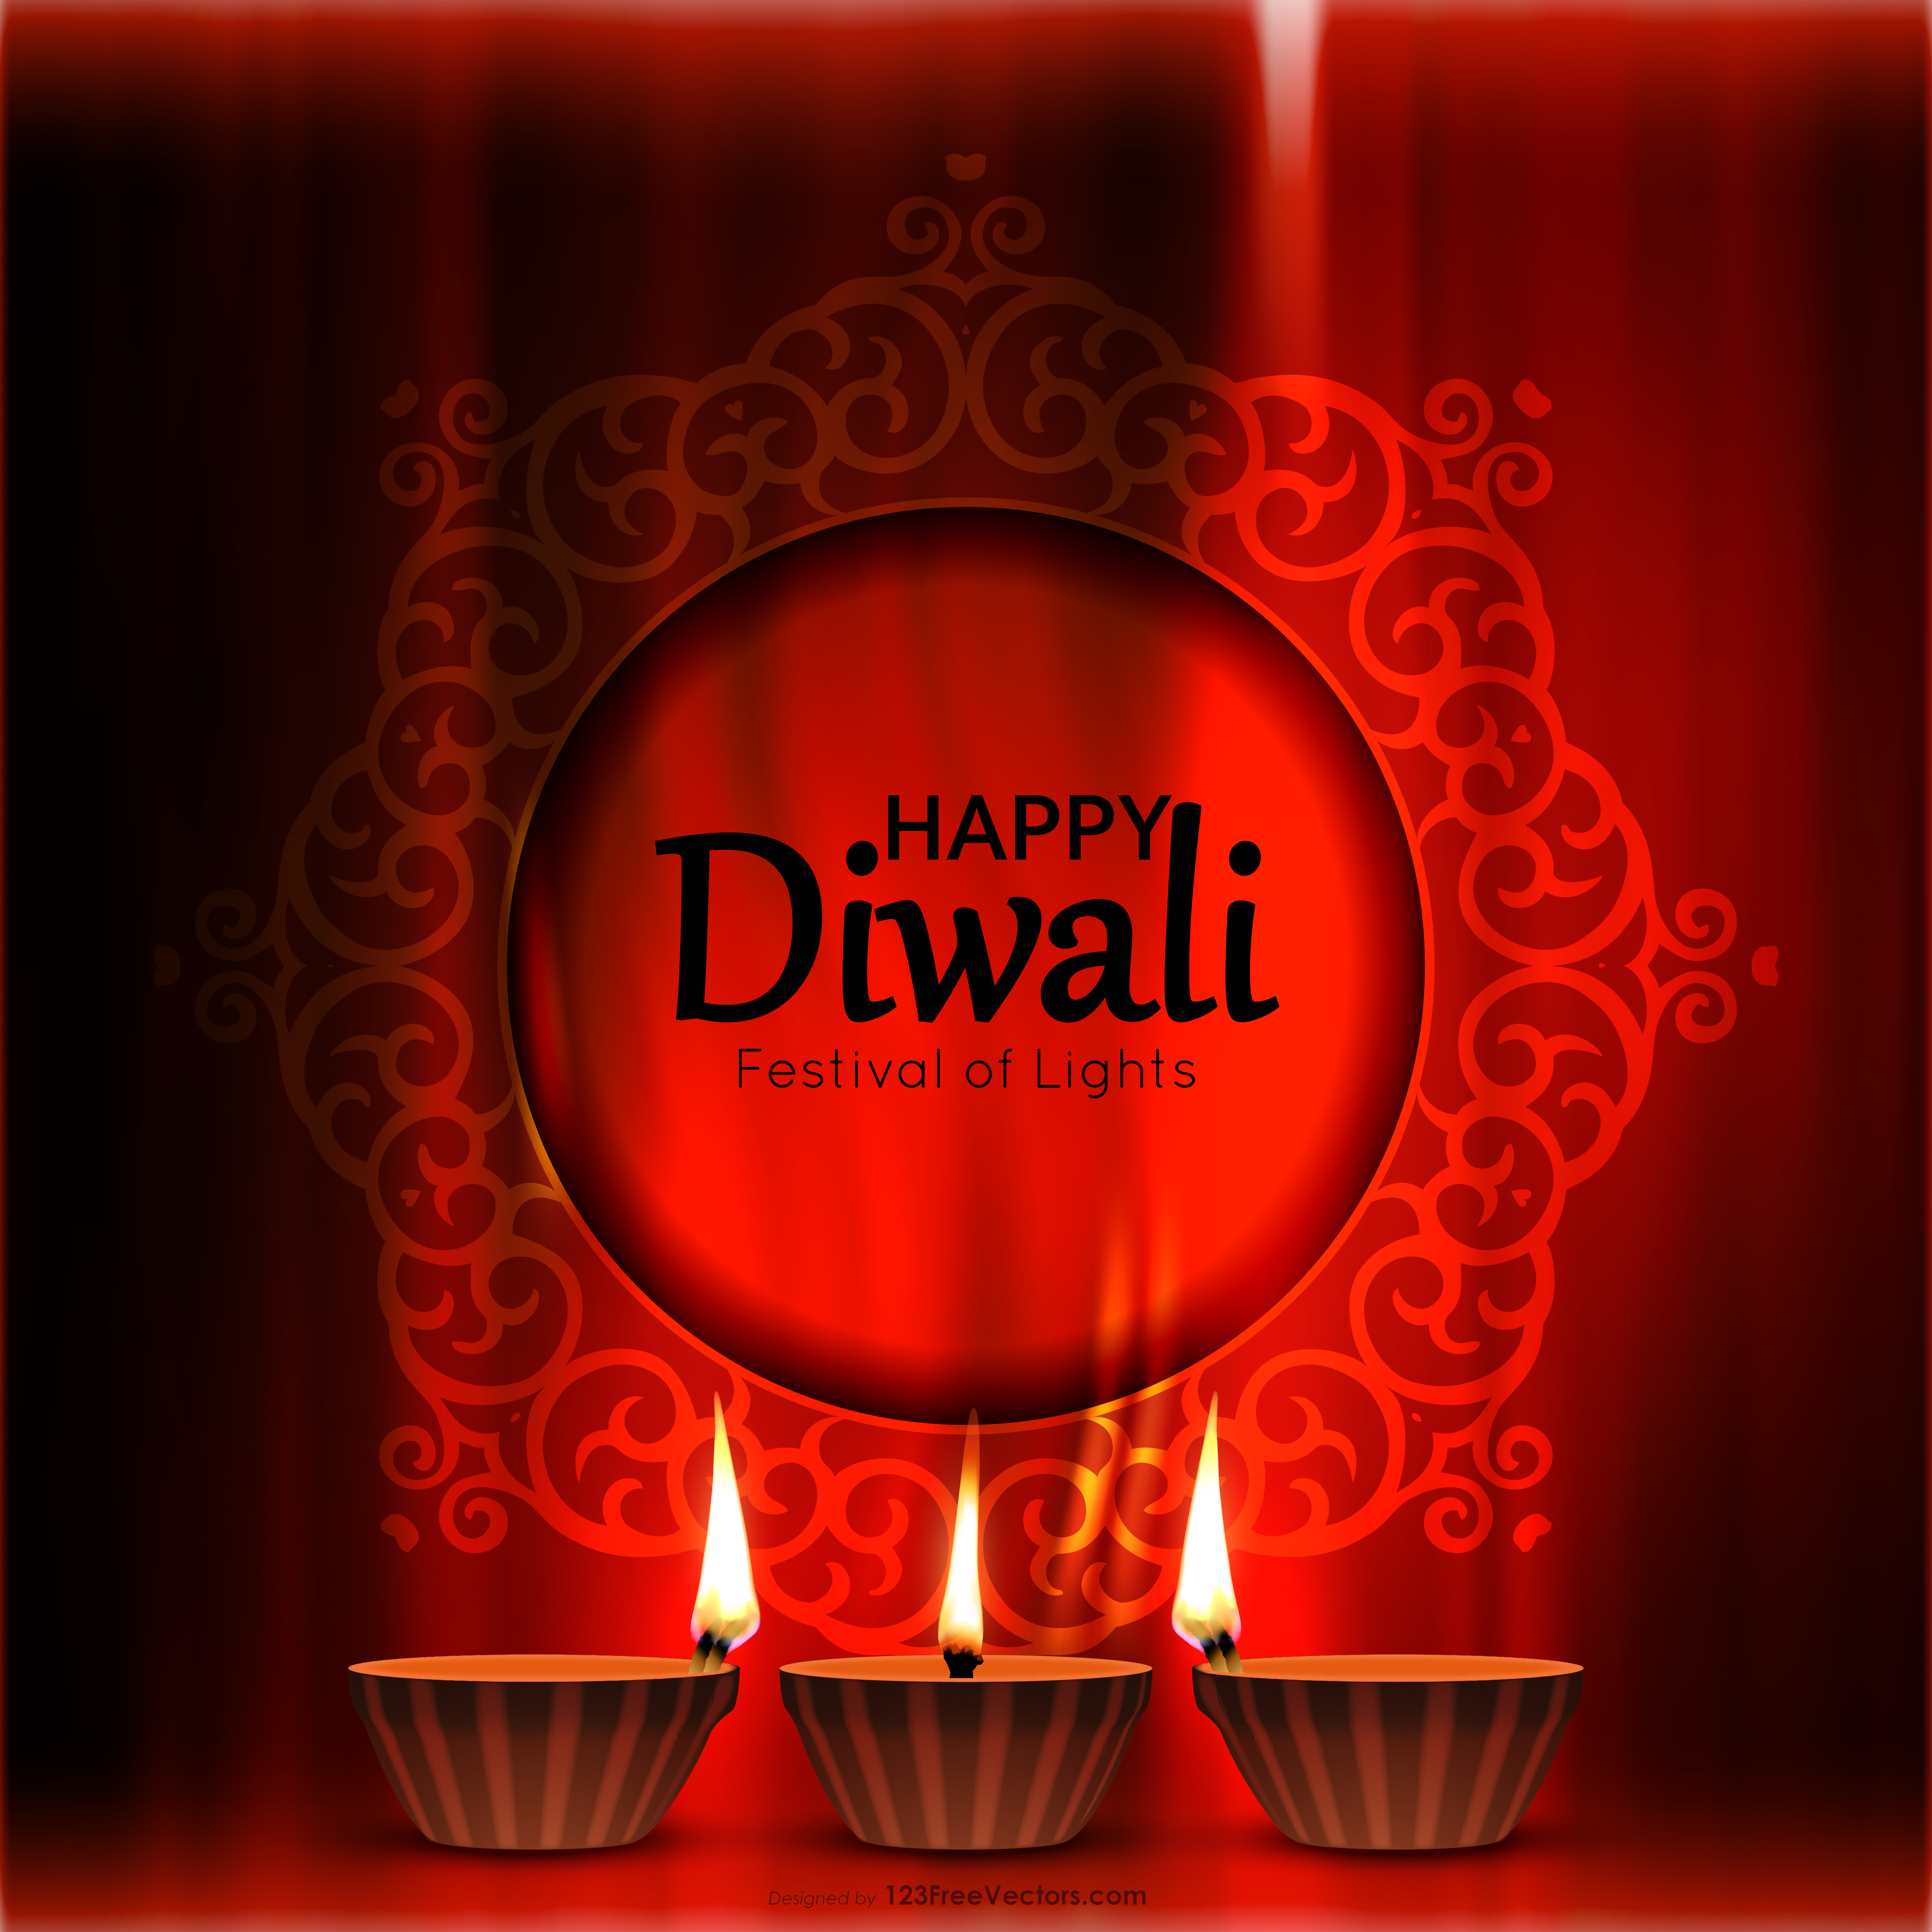 Diwali wallpaper Greeting by rjthakur on DeviantArt